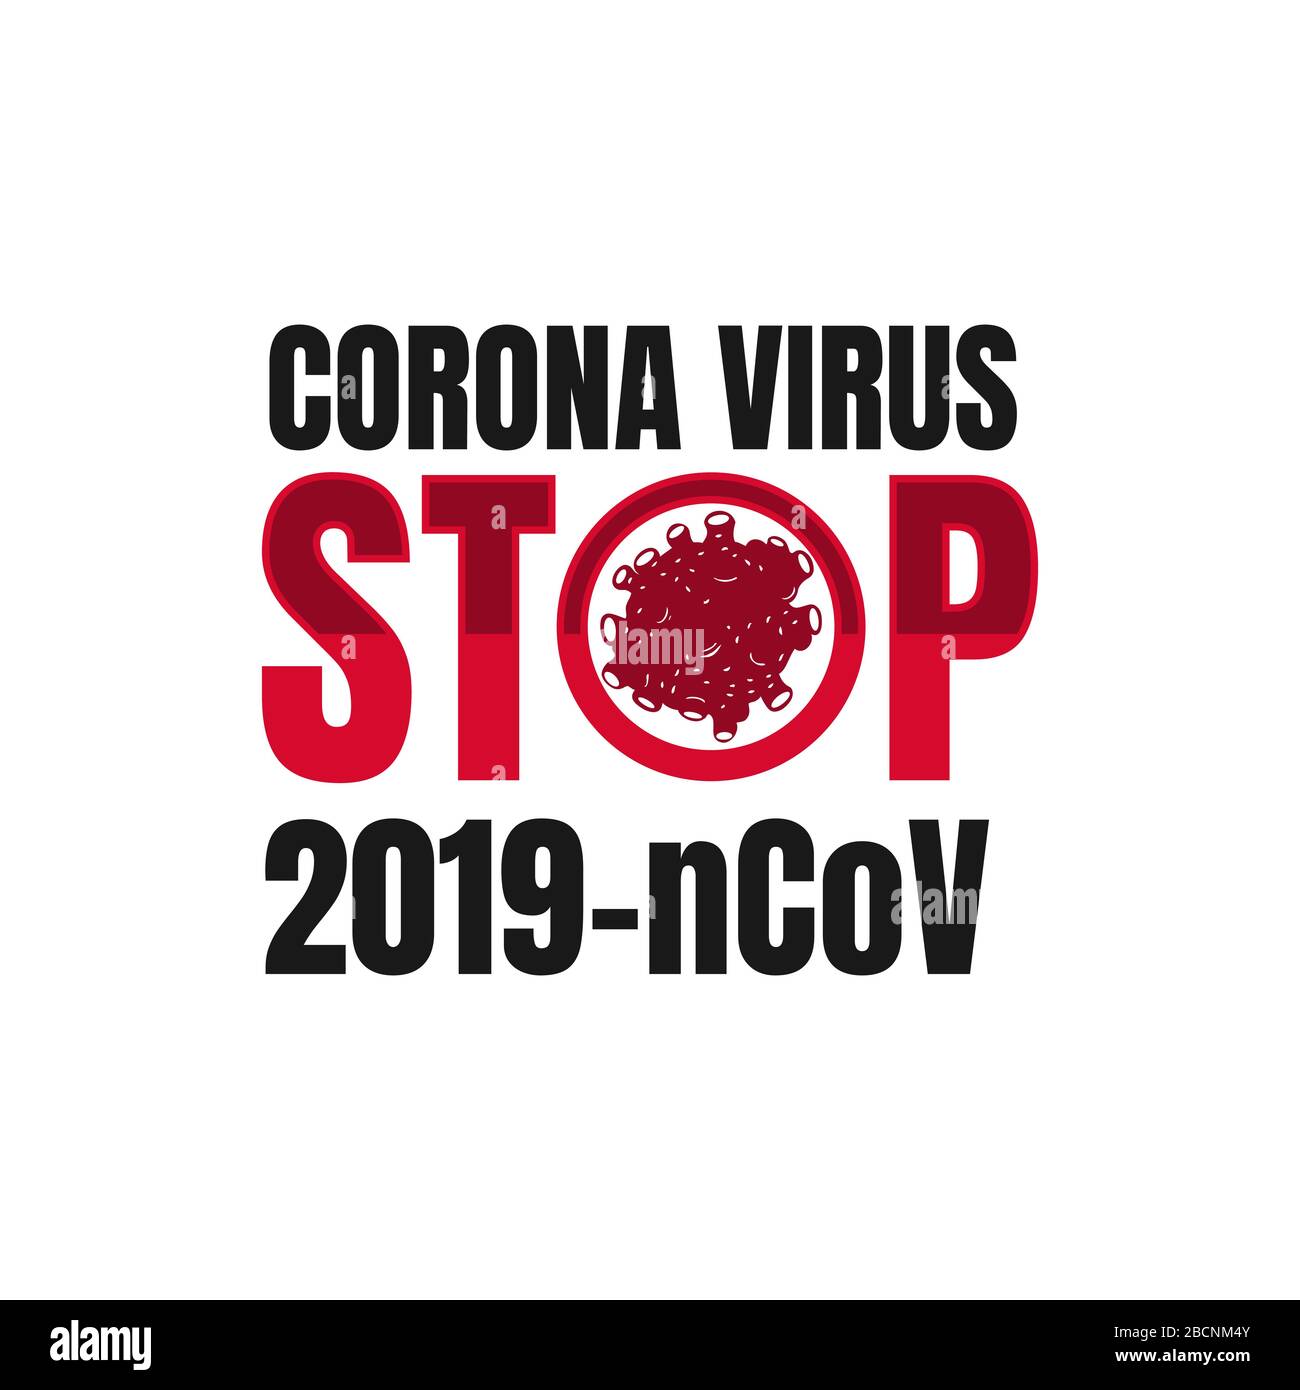 Coronavirus Bacteria Cell Icon, 2019-nCoV Novel Coronavirus Bacteria. No Infection and Stop Coronavirus Concepts. Dangerous Coronavirus Cell in China, Stock Vector